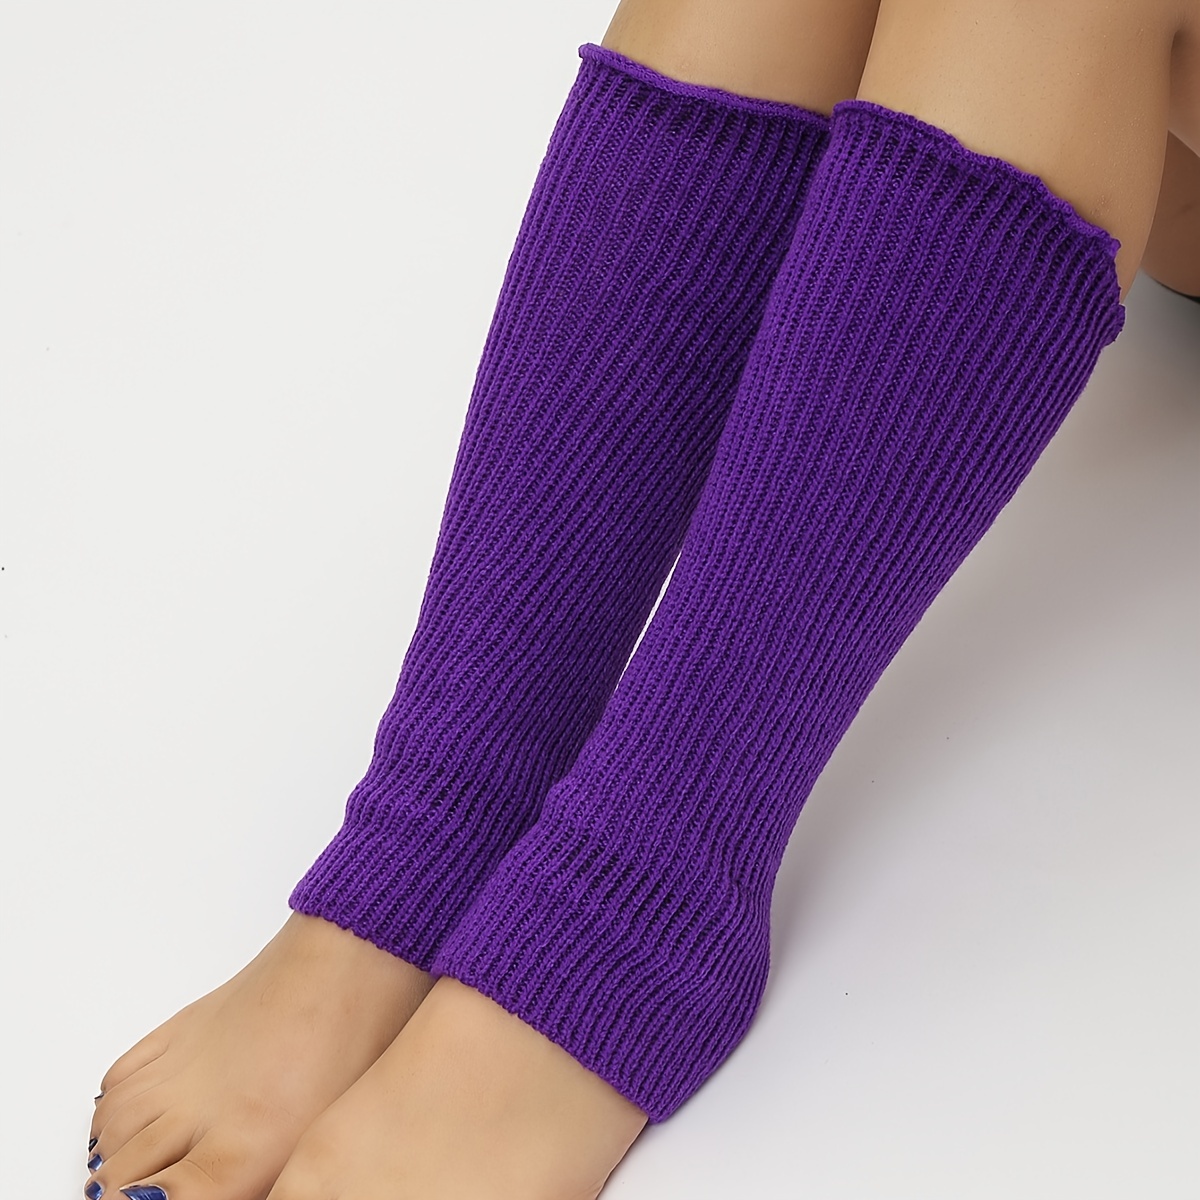 Trends Leg Warmers For Women Girls 80s Ribbed Leg Warmer For Neon